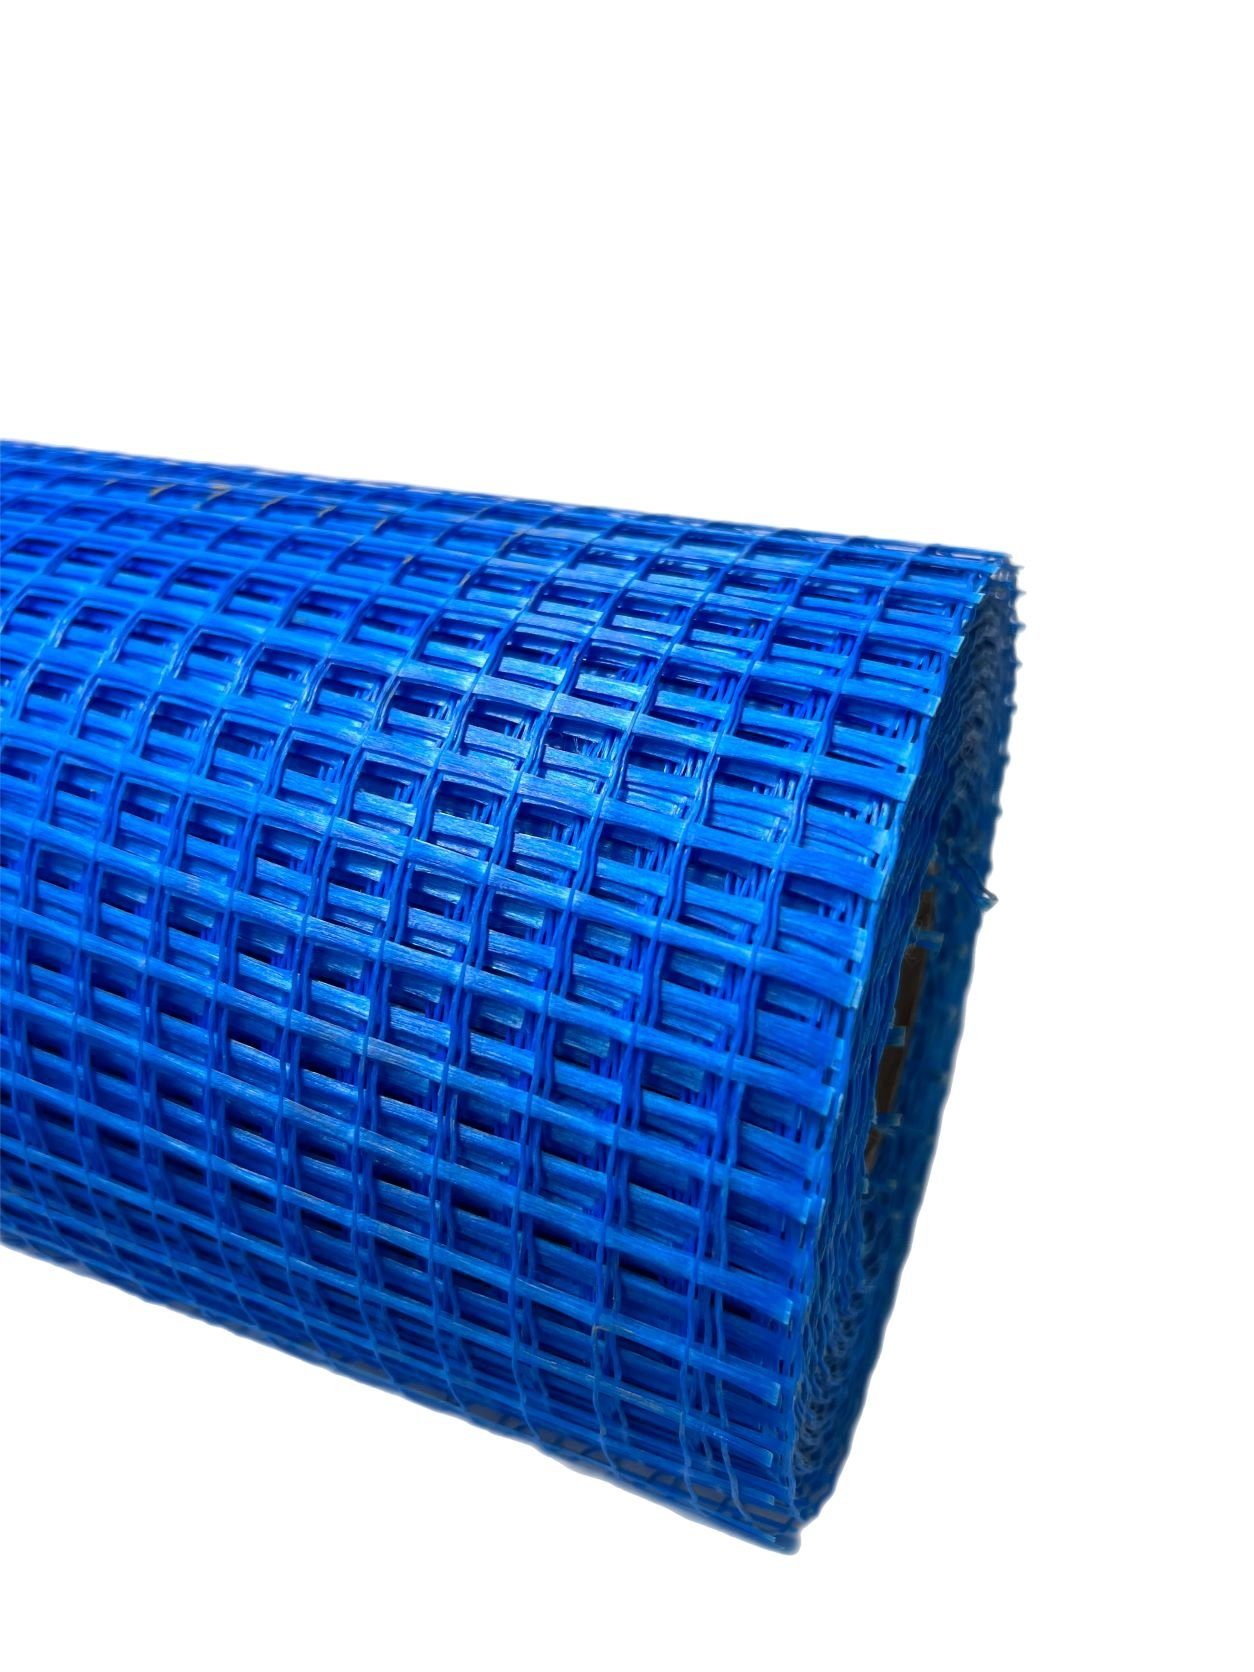 VaGo-Tools Armierungsgewebe Glaswolle Blau 150m² 110g/m² Putzgewebe